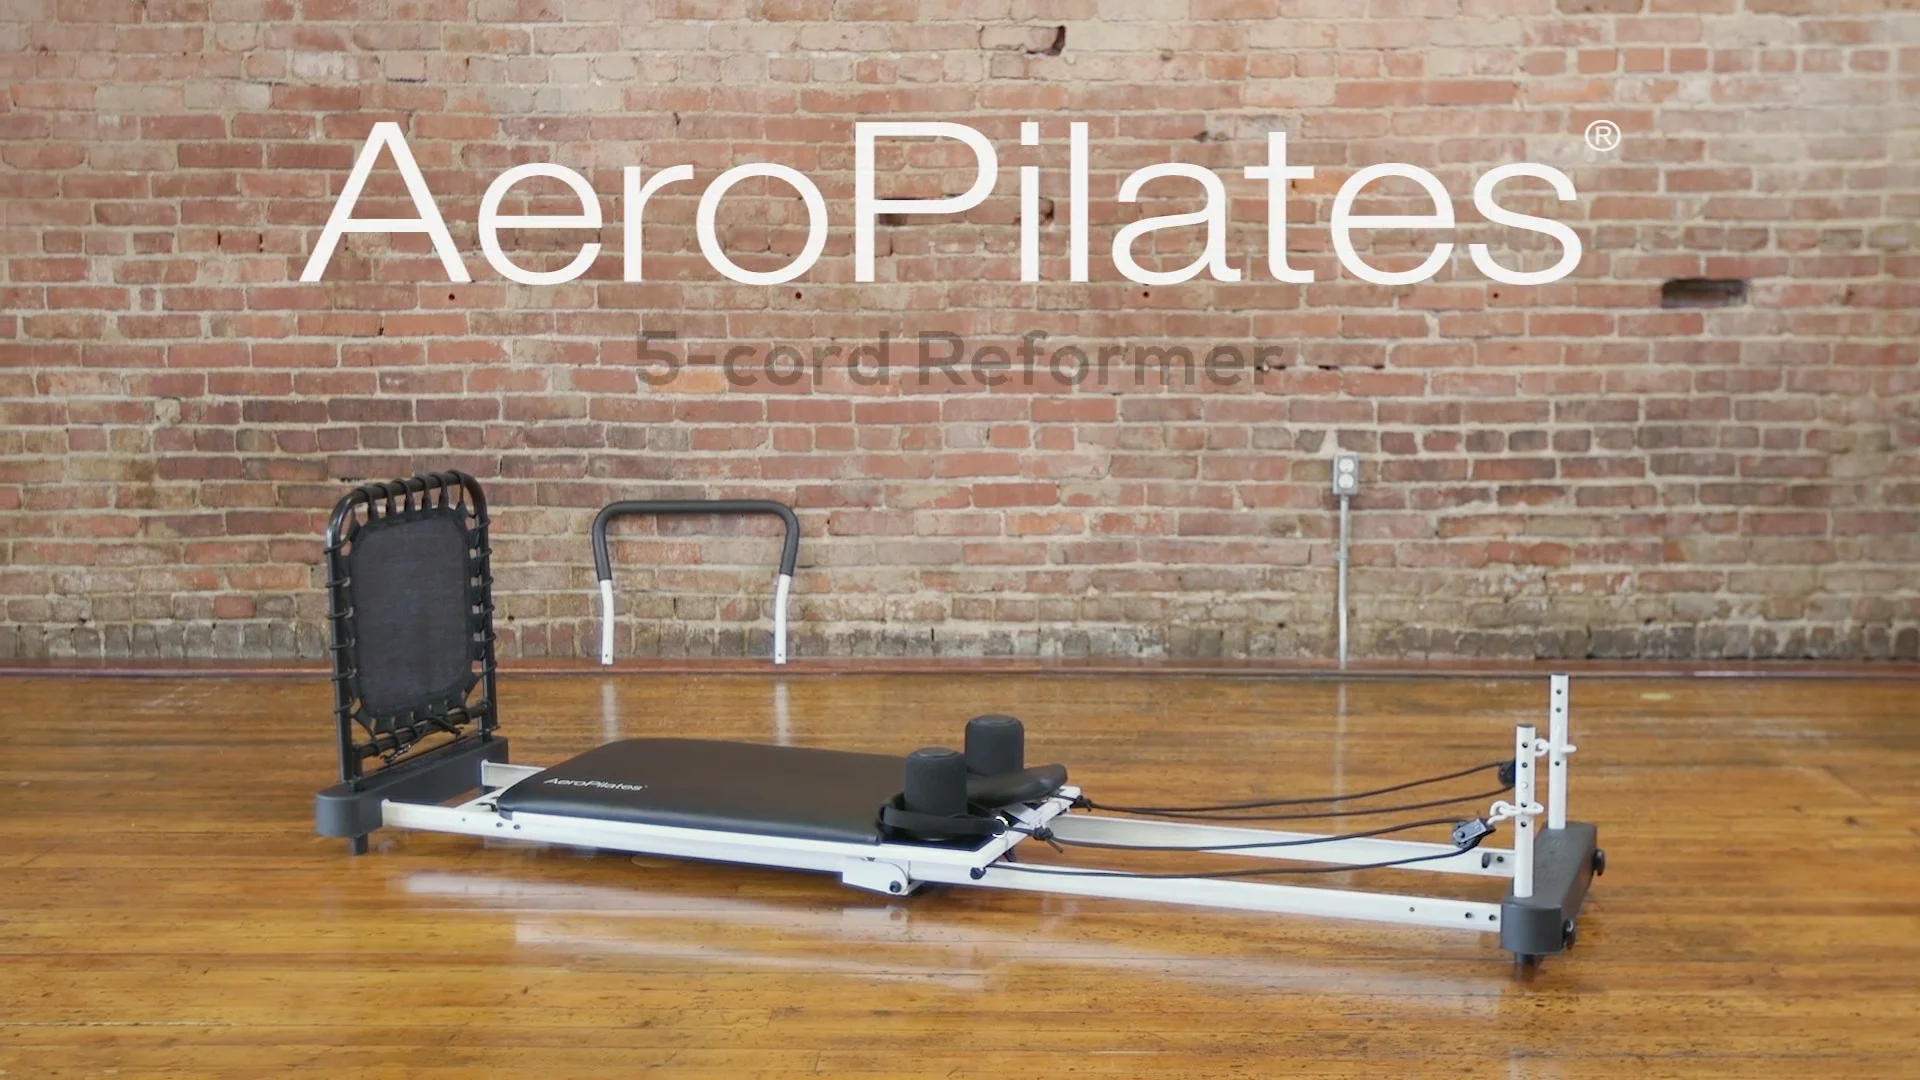 AeroPilates 5-Cord Reformer - 55-5010 on Vimeo